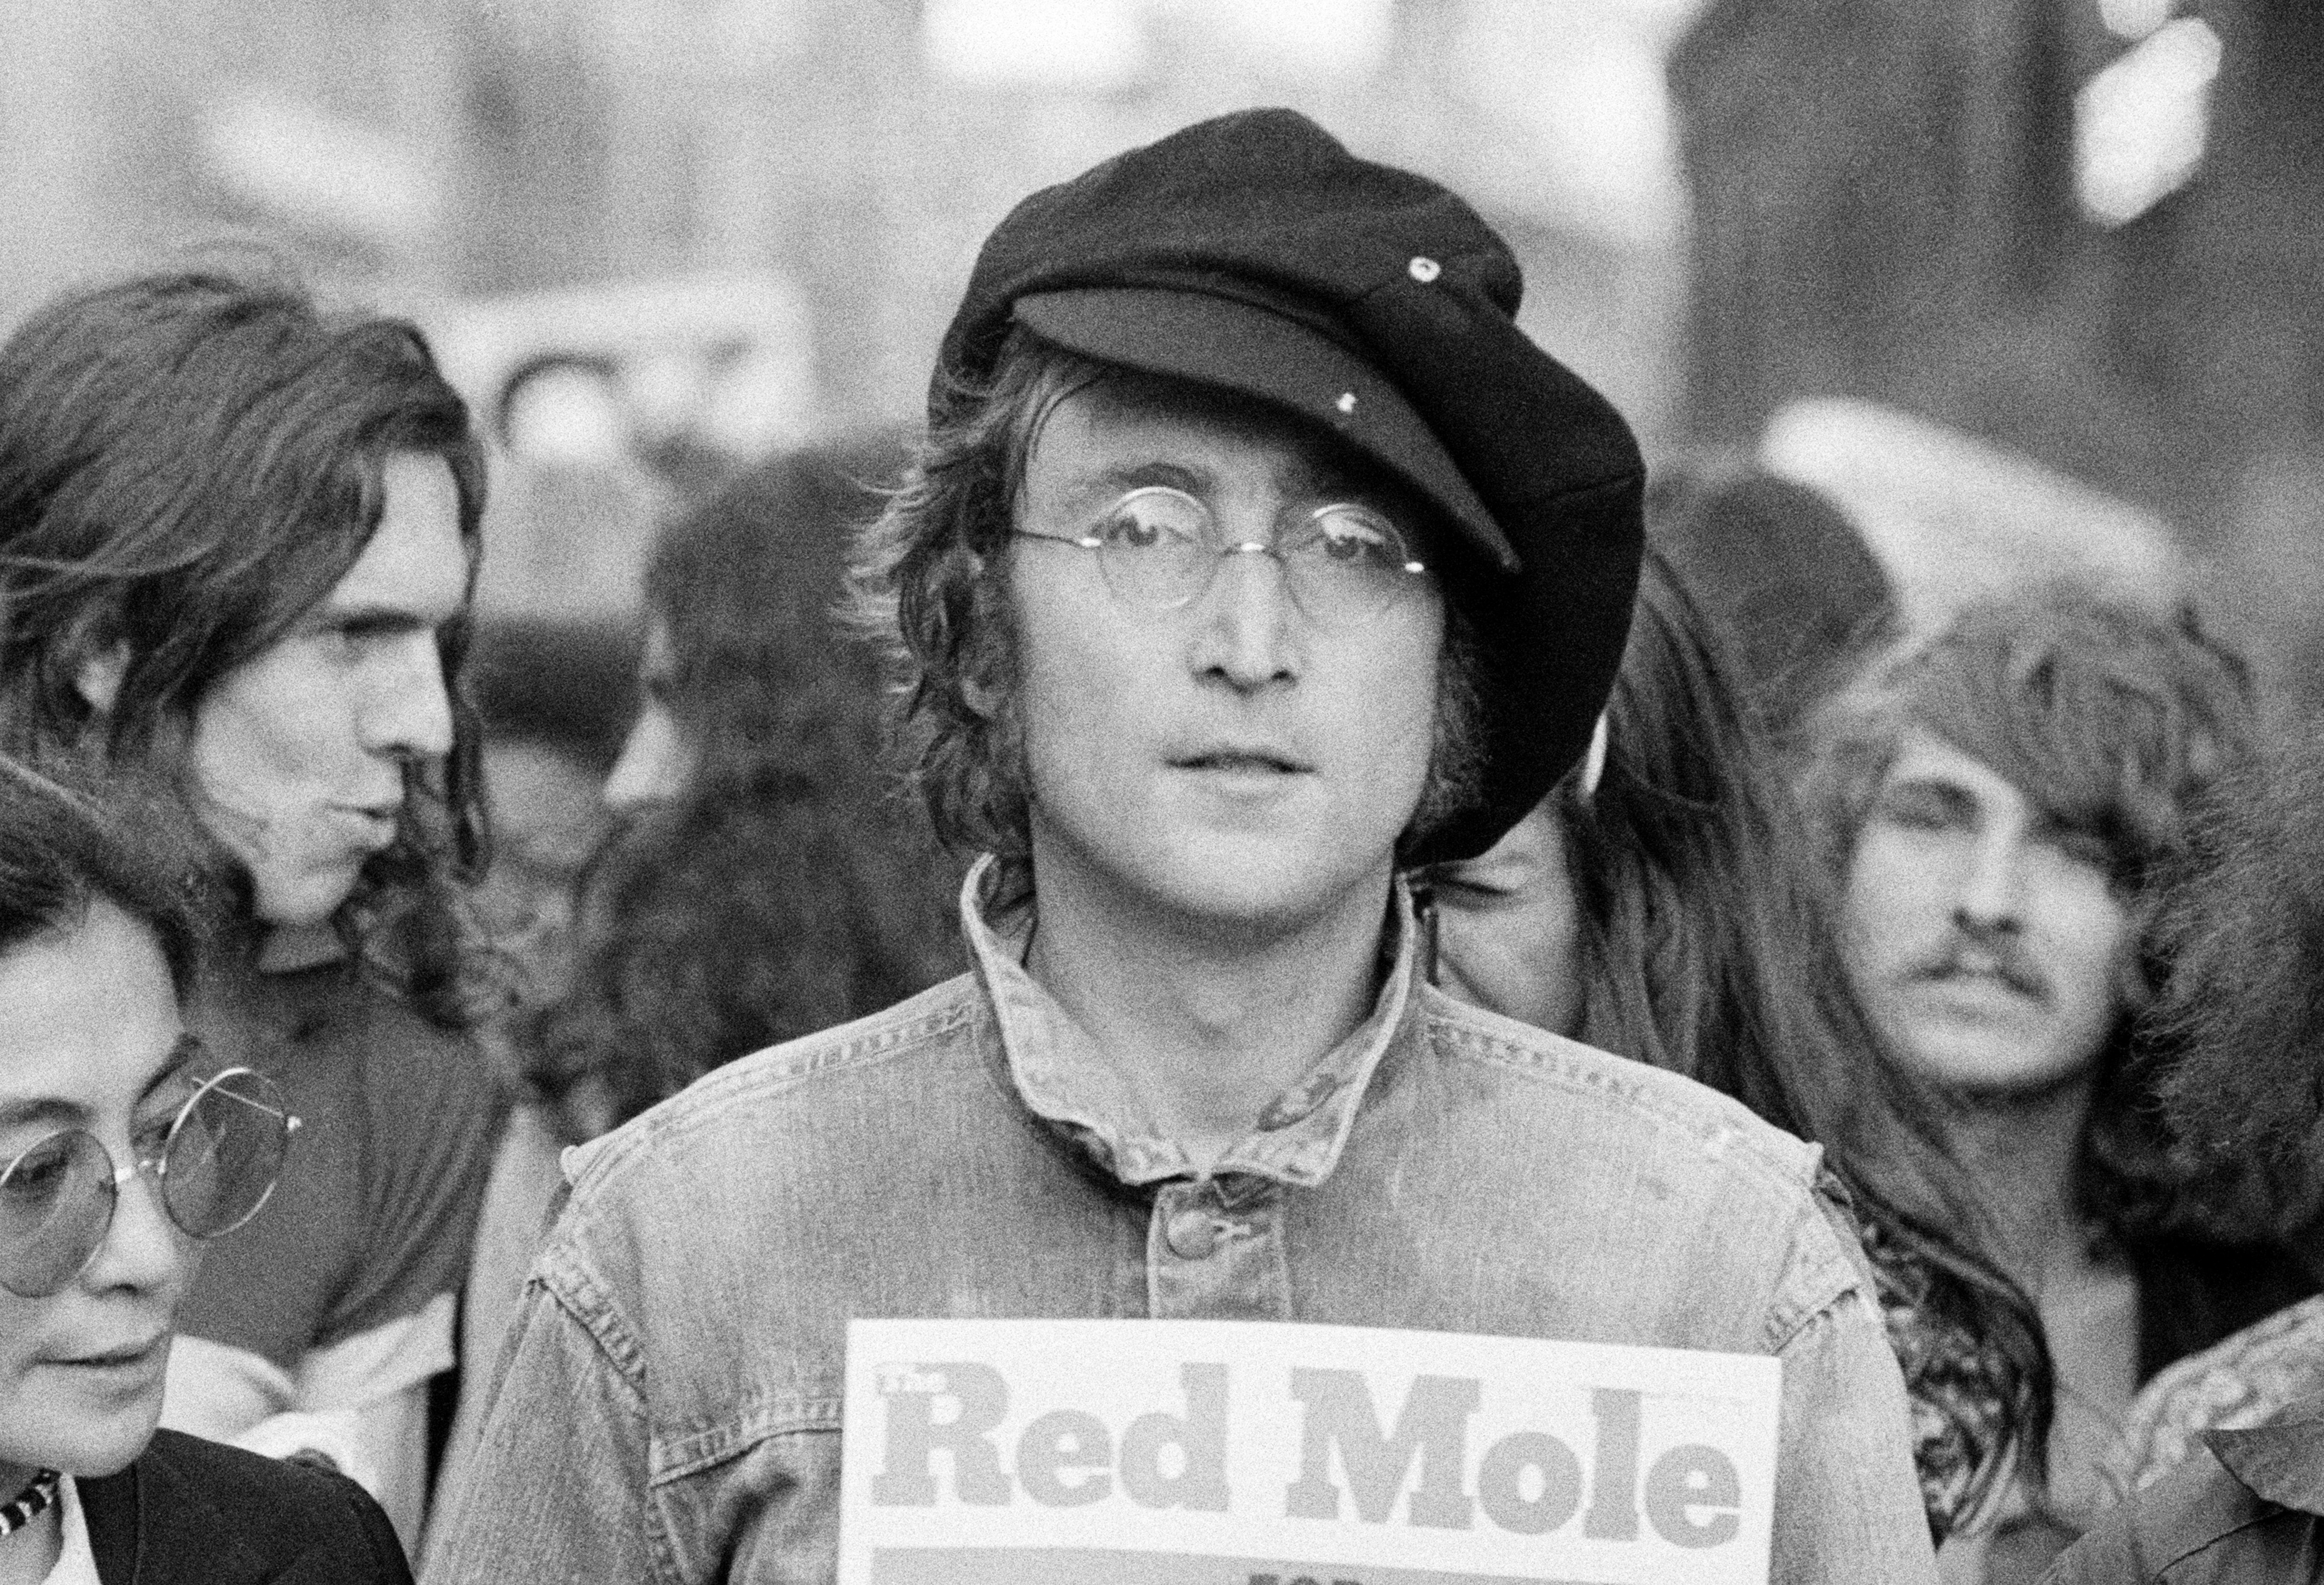 The Beatles' John Lennon holding a copy of 'Red Mole'